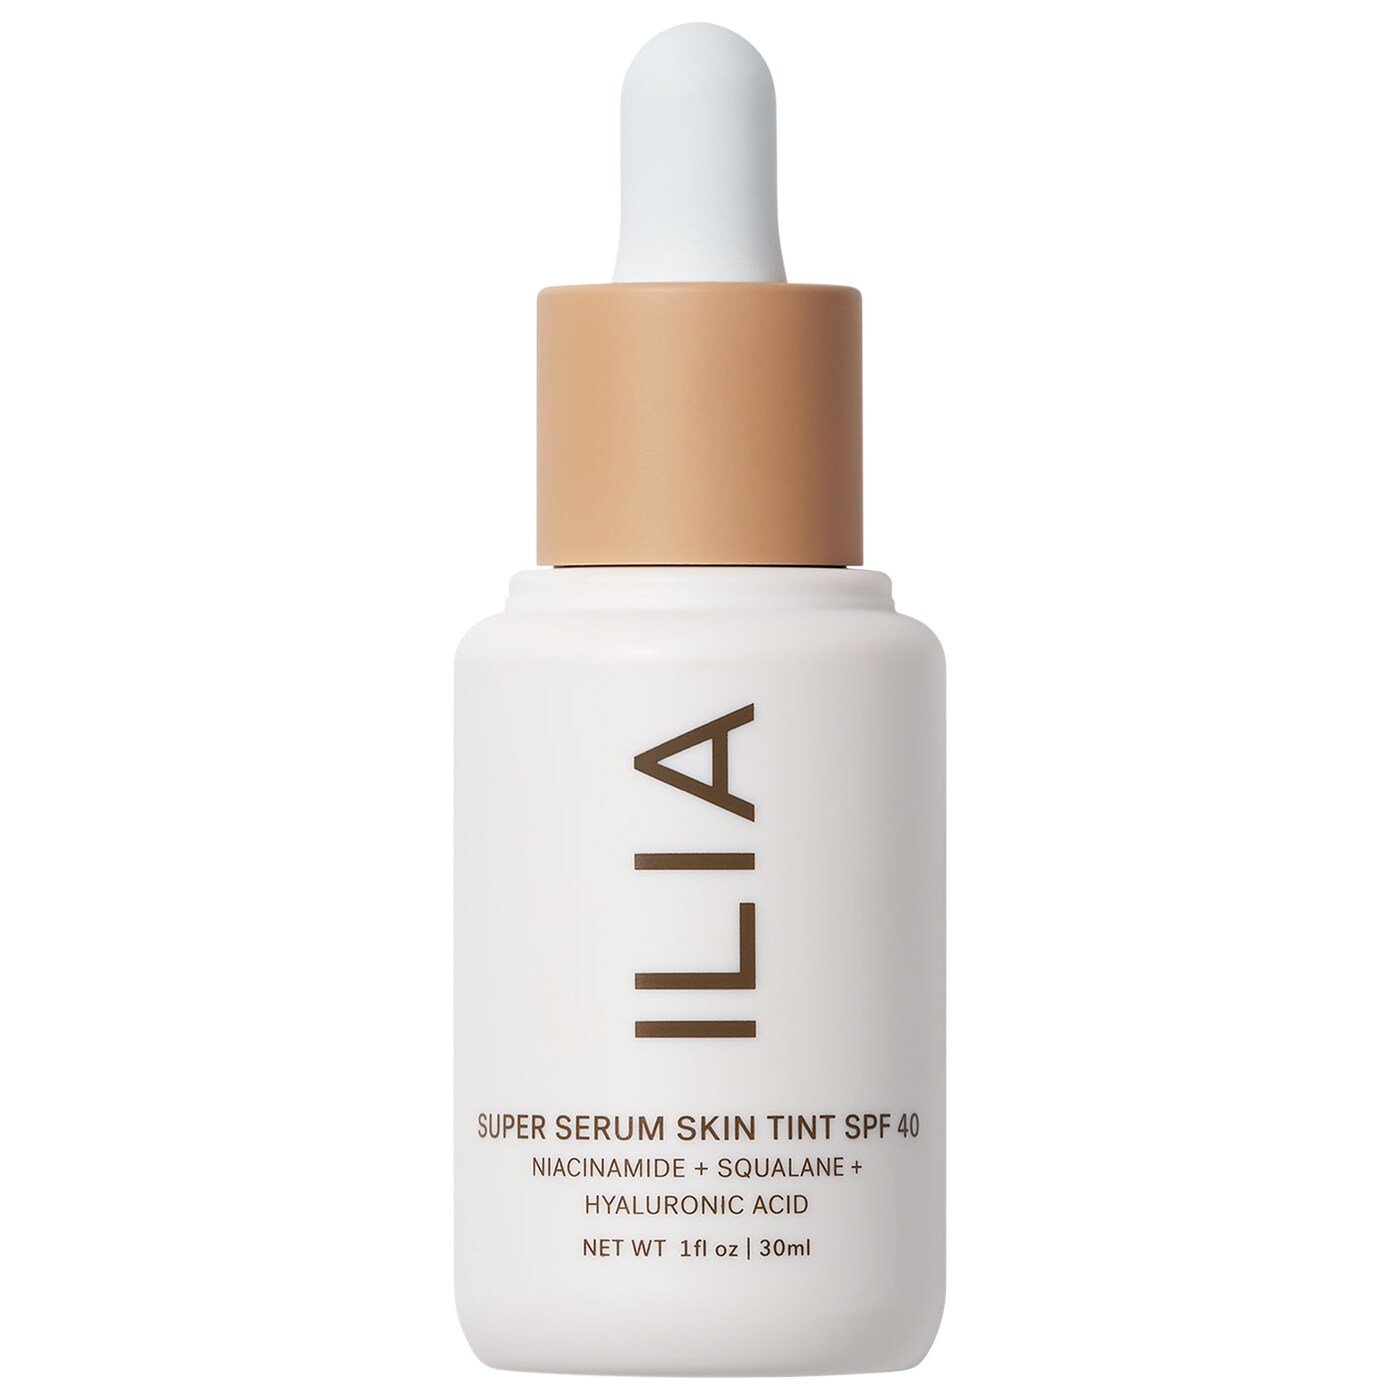 Ilia Super Serum Skin Tint (Copy)